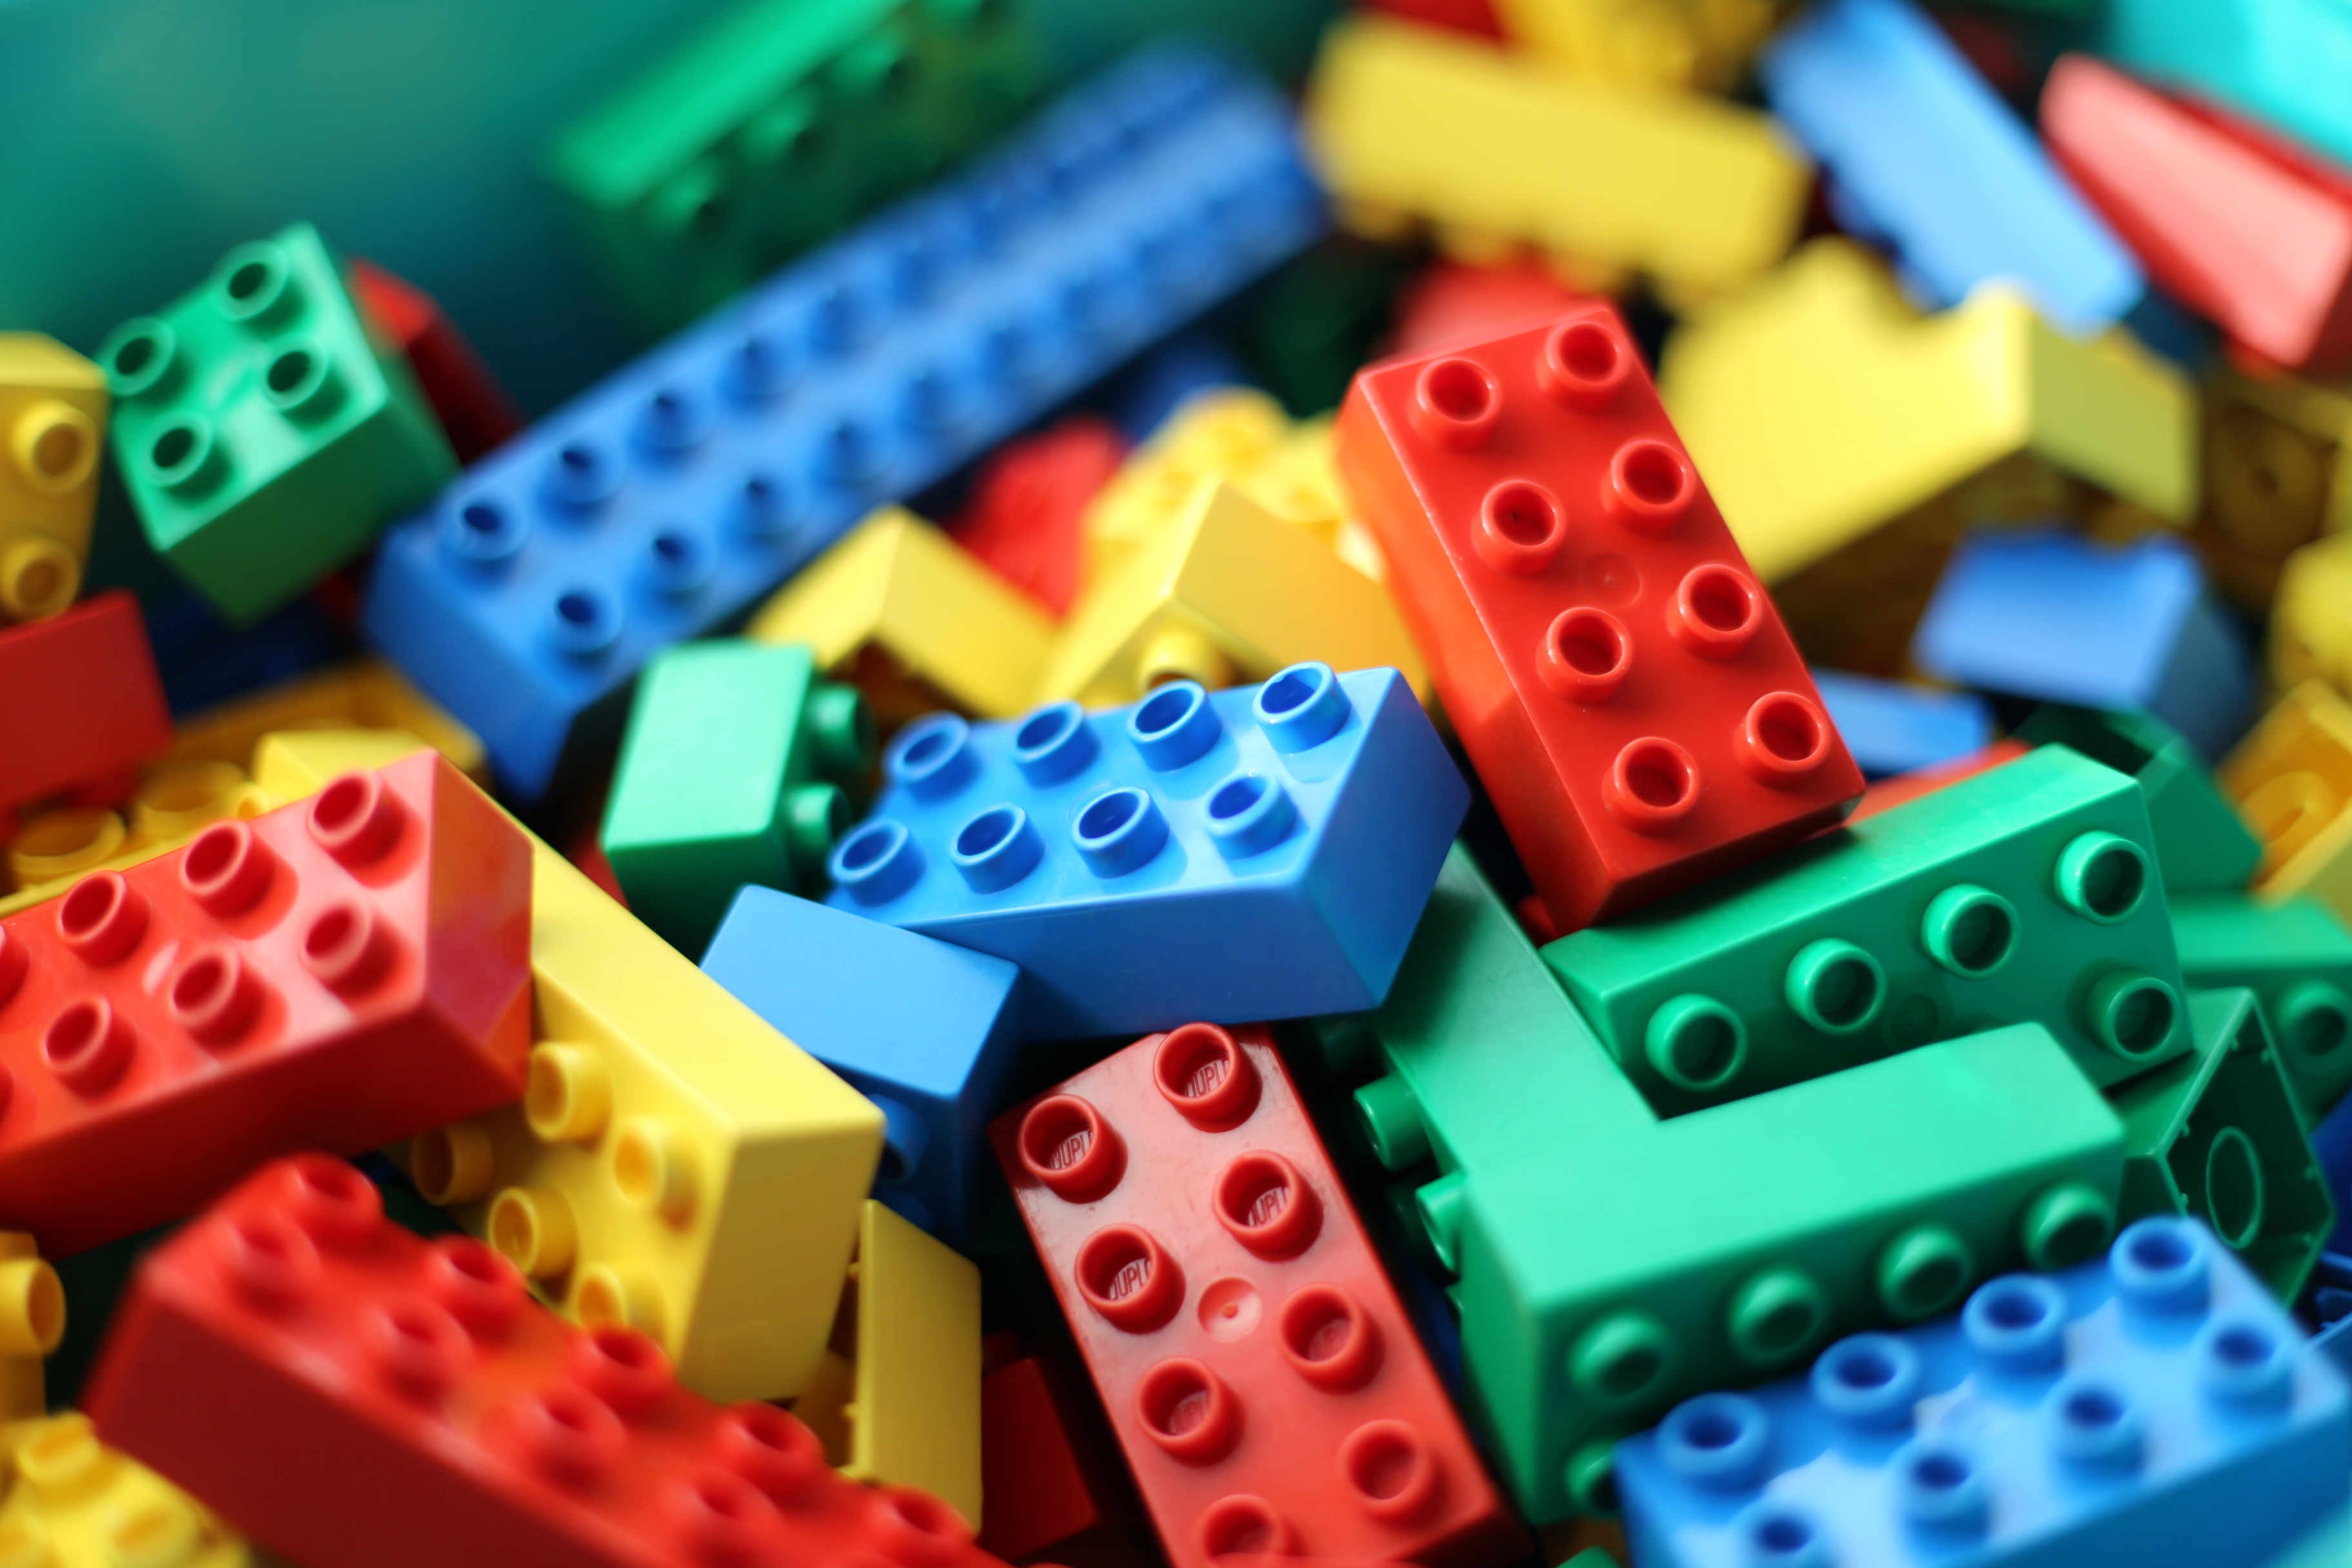 Used Lego Duplo Bricks by Arto Alanenpää is licensed under CC BY-SA 4.0 (https://commons.wikimedia.org/wiki/File:Lego_dublo_arto_alanenpaa_5.JPG)